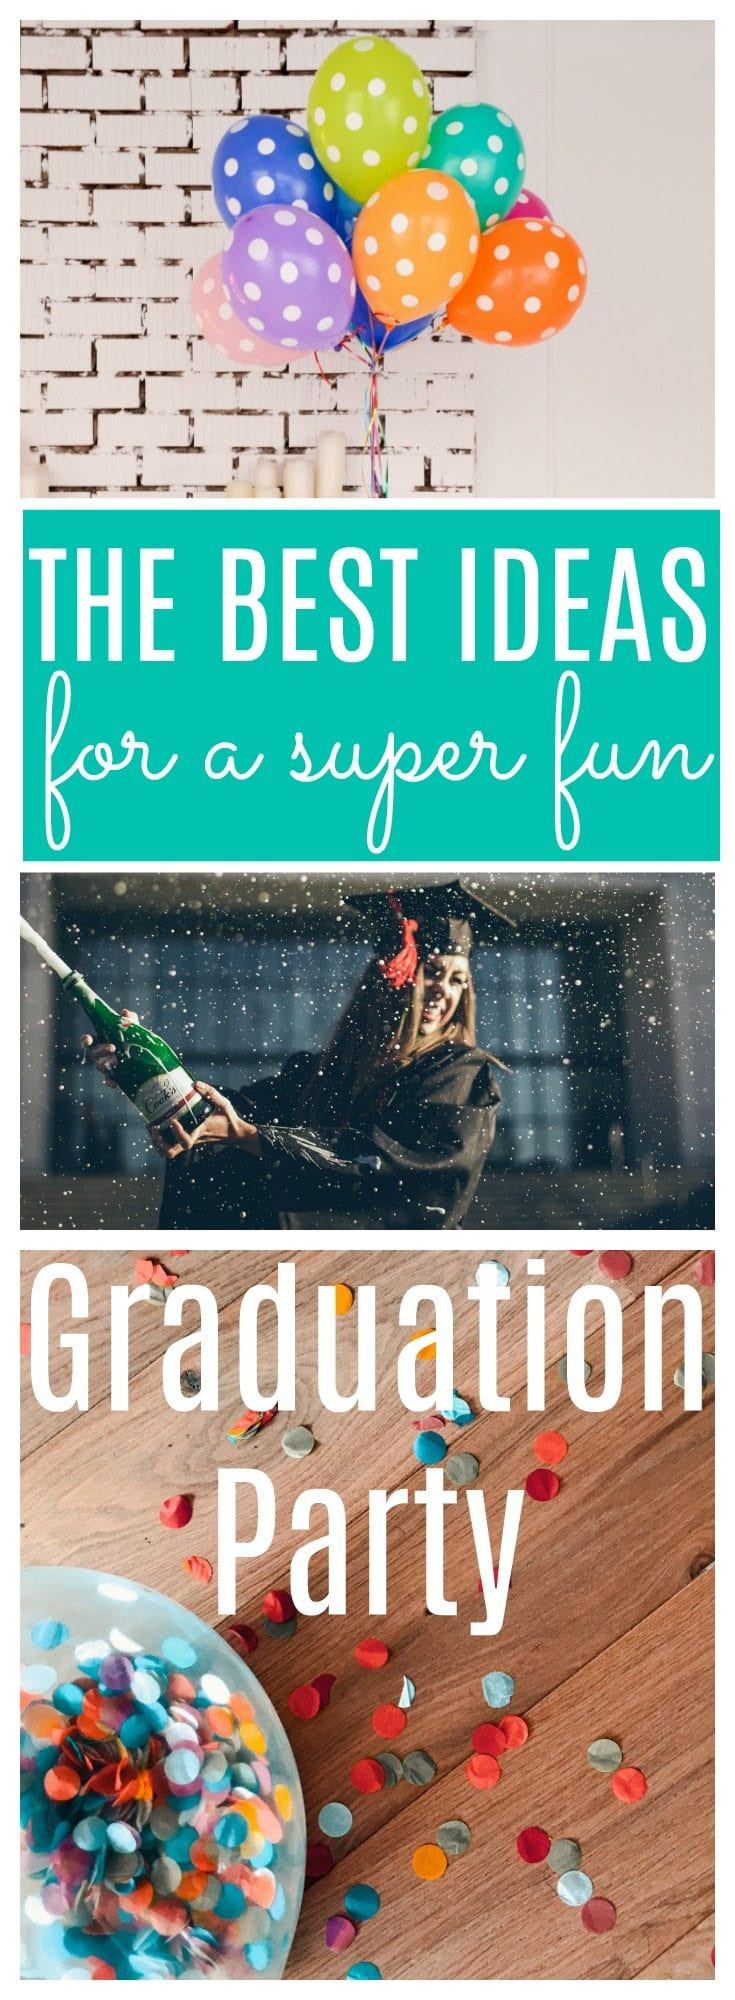 Graduation Party Celebration Ideas
 Graduation Party Ideas How to Celebrate Your Senior s Big Day